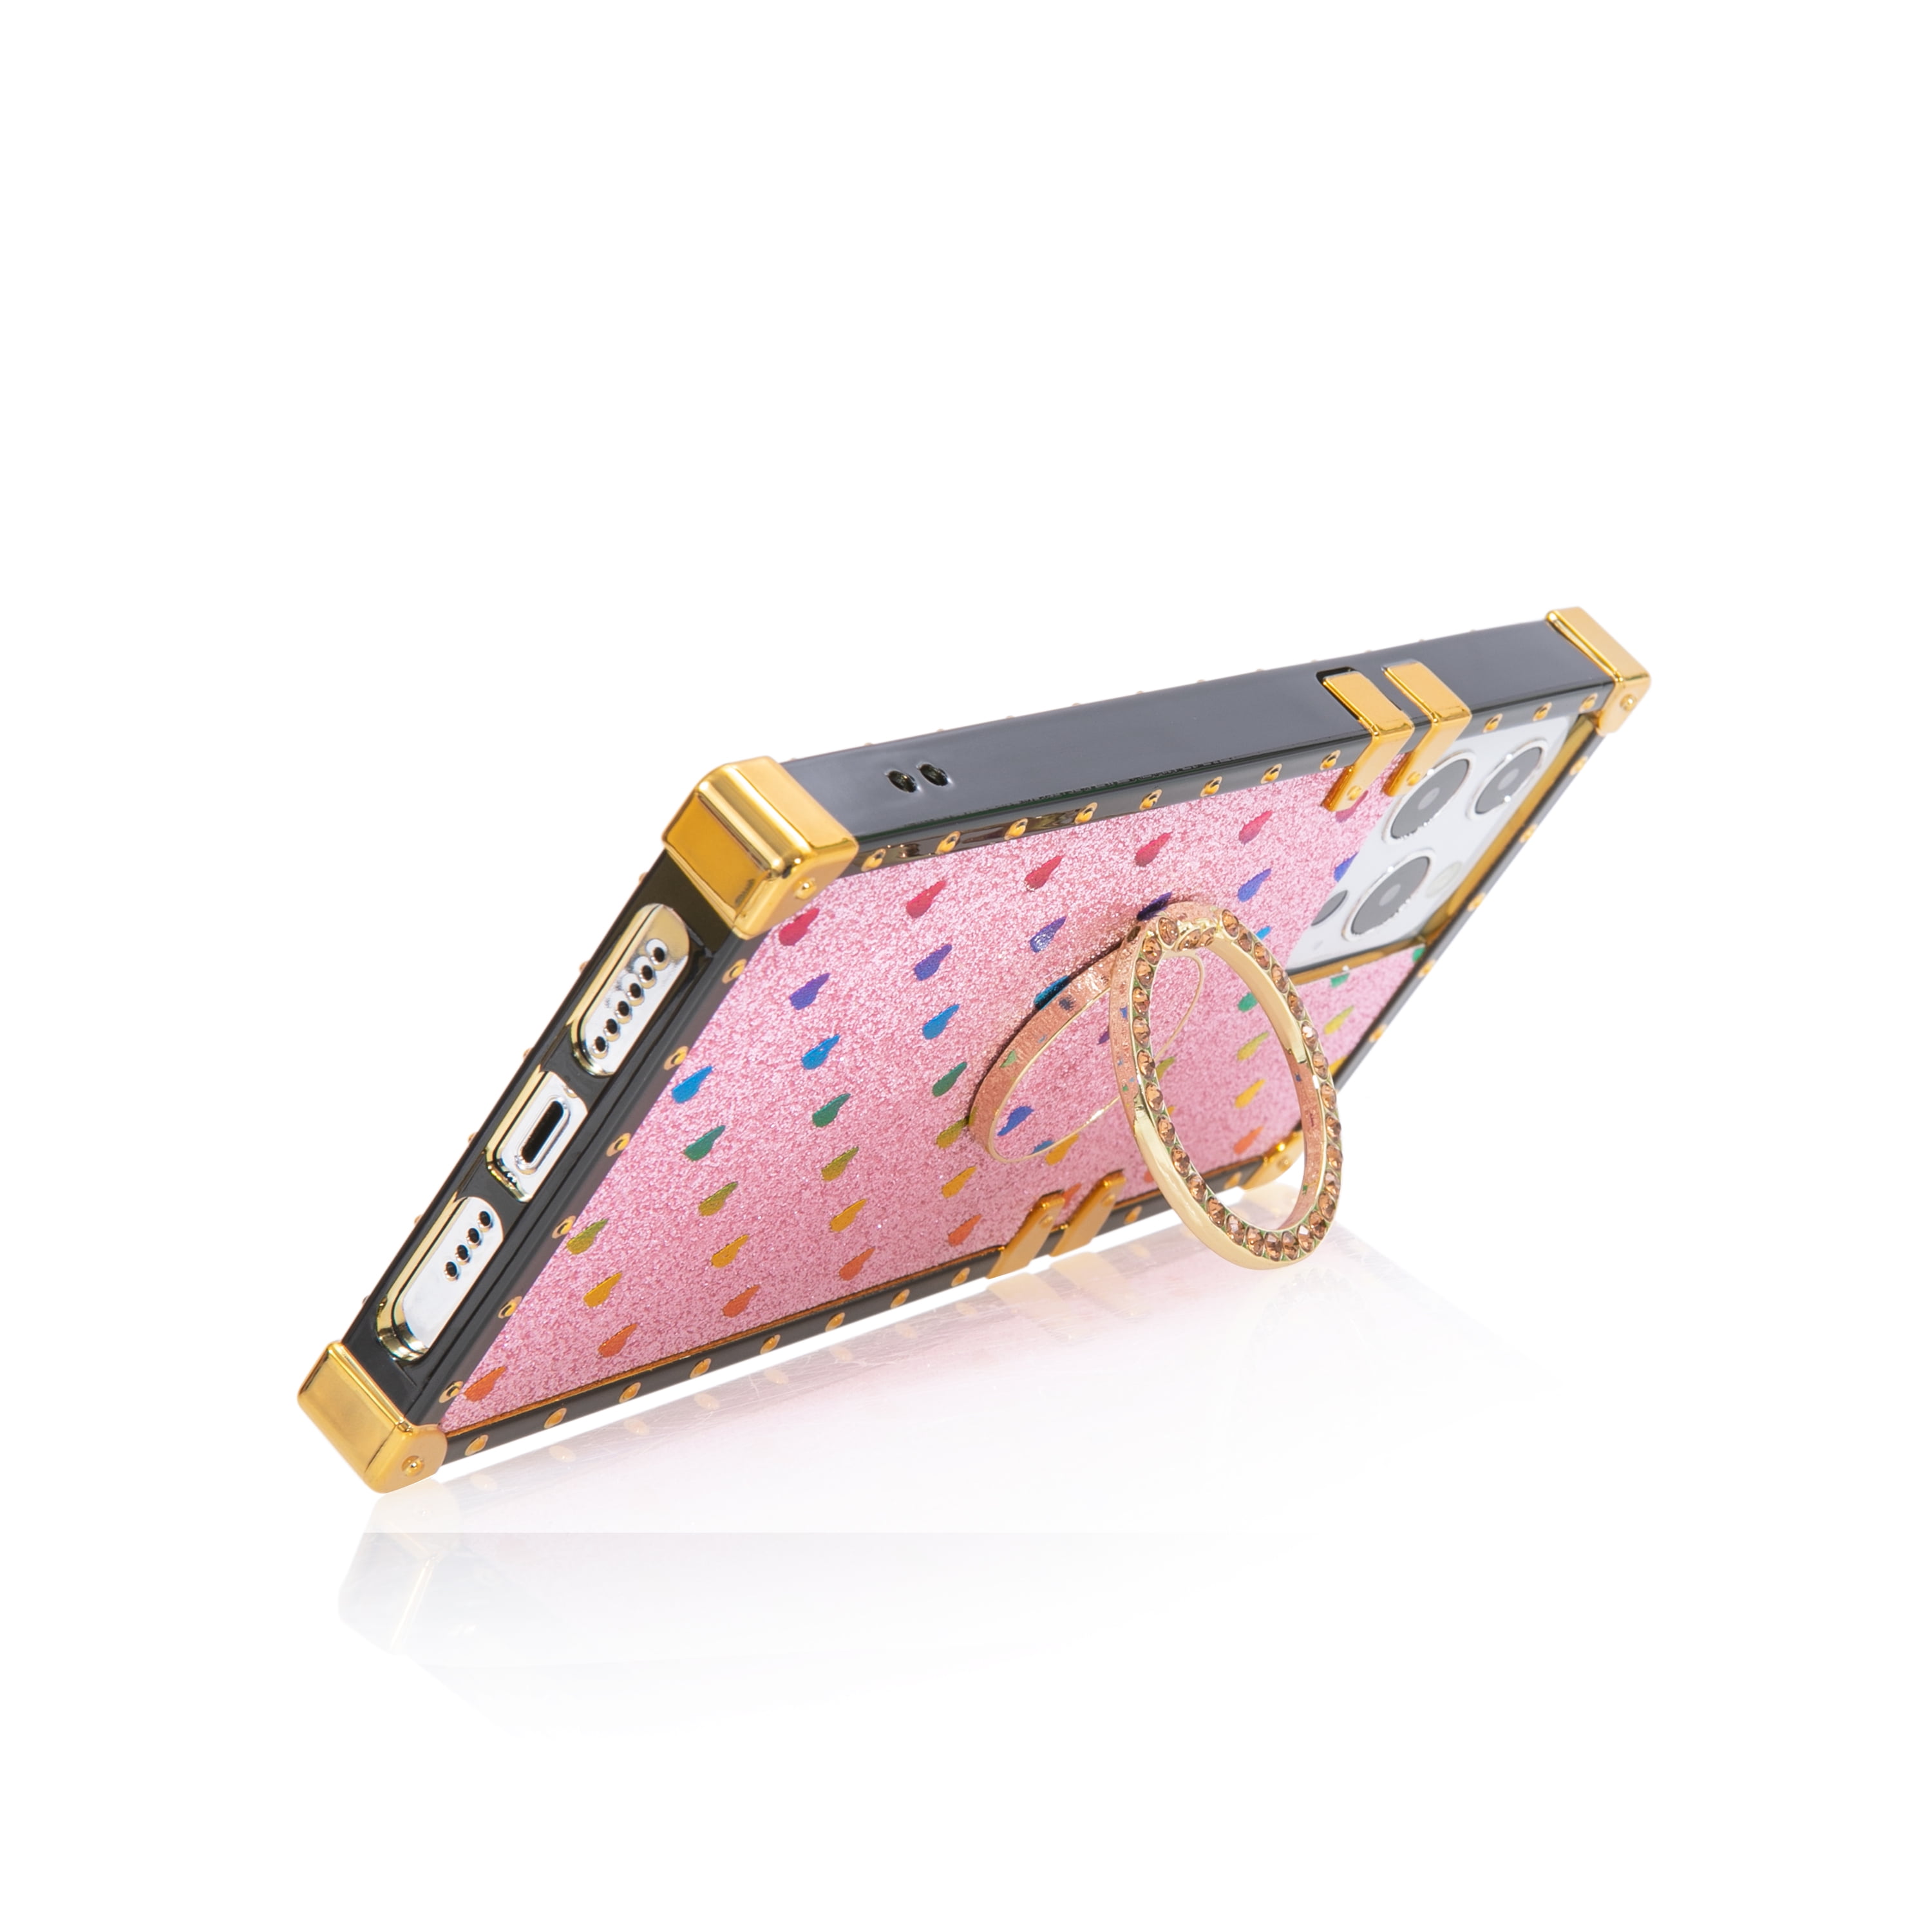 KIQ Square TPU Series Cute iPhone 14 Pro Max Case For Women Girls